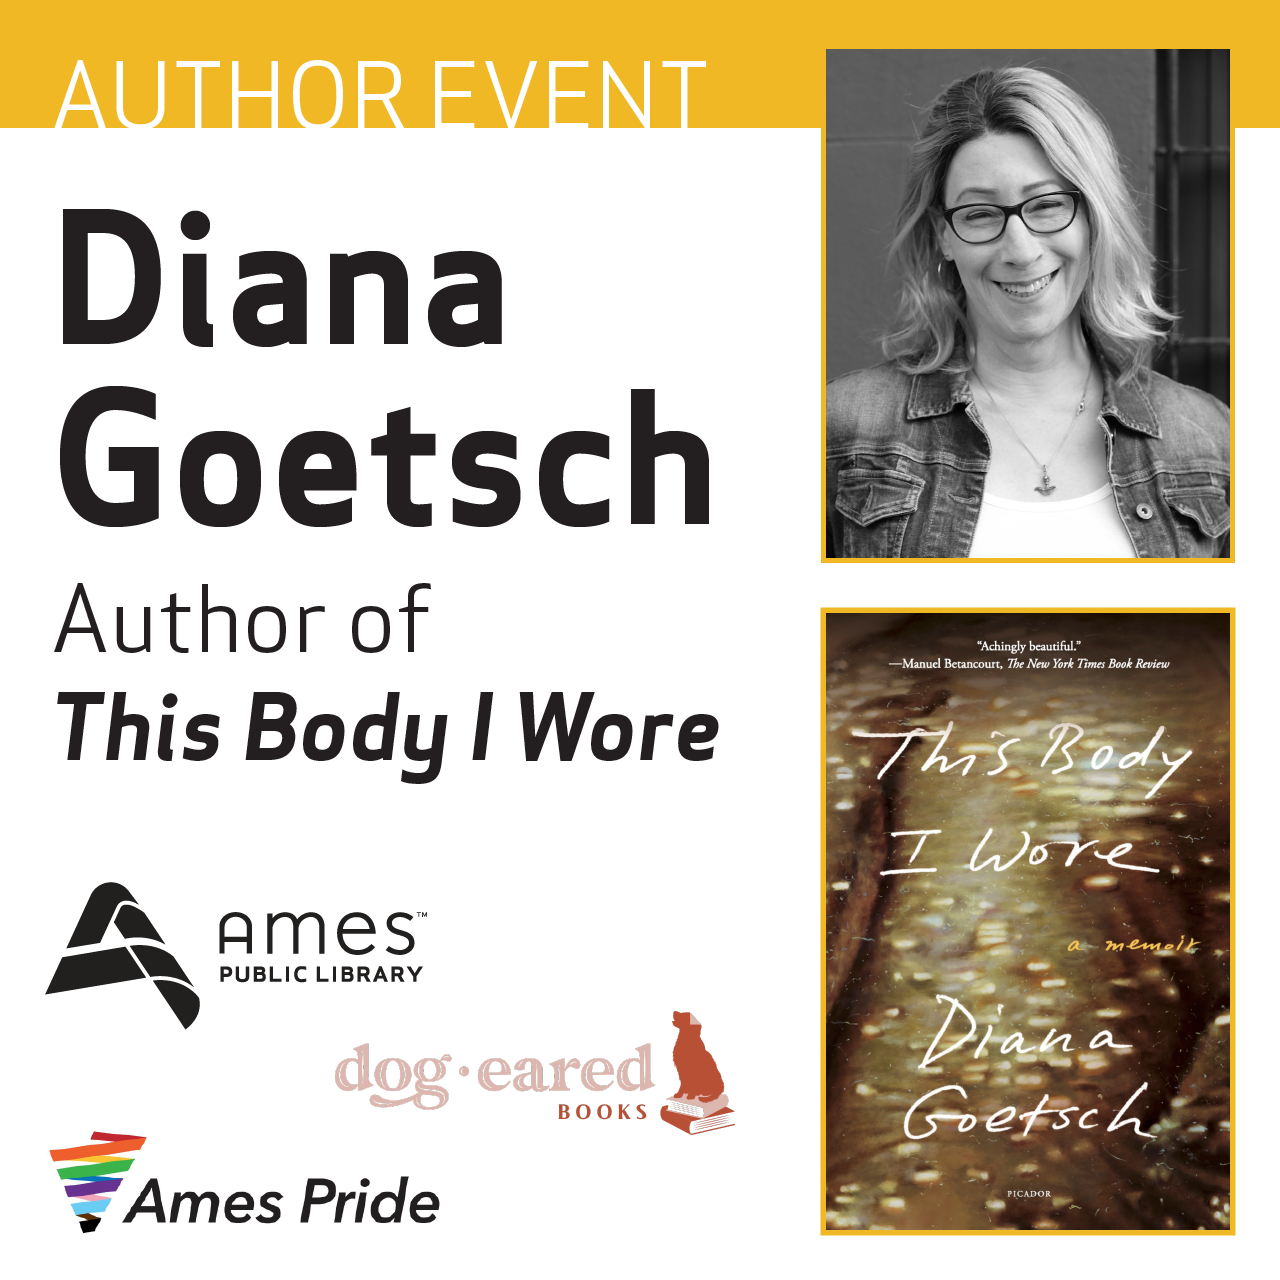 Author Event: Diana Goetsch Author of "This Body I Wore"